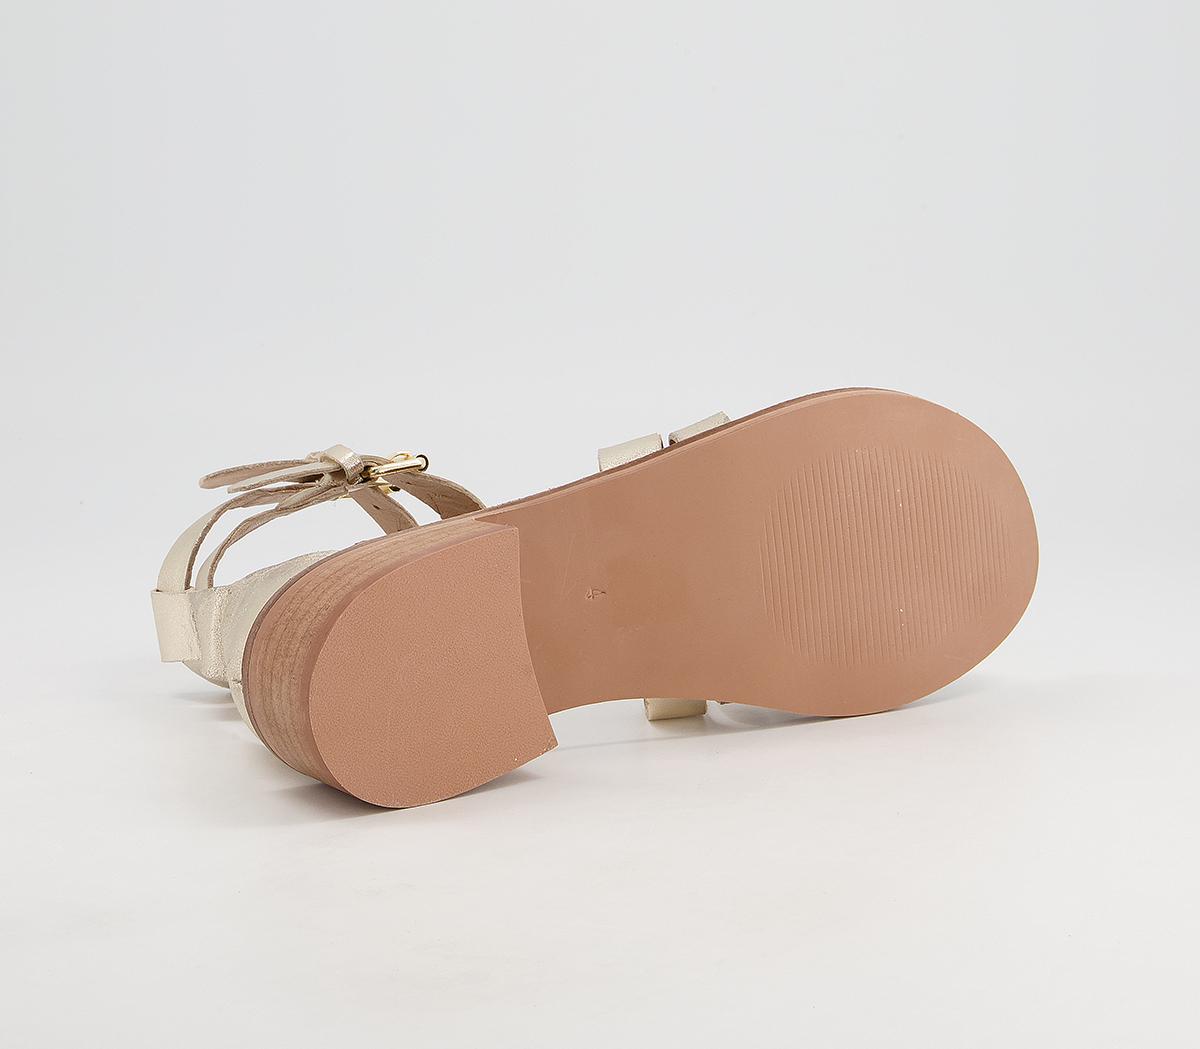 OFFICE Spectrum Buckle Gladiator Sandals Gold Leather - Women’s Sandals